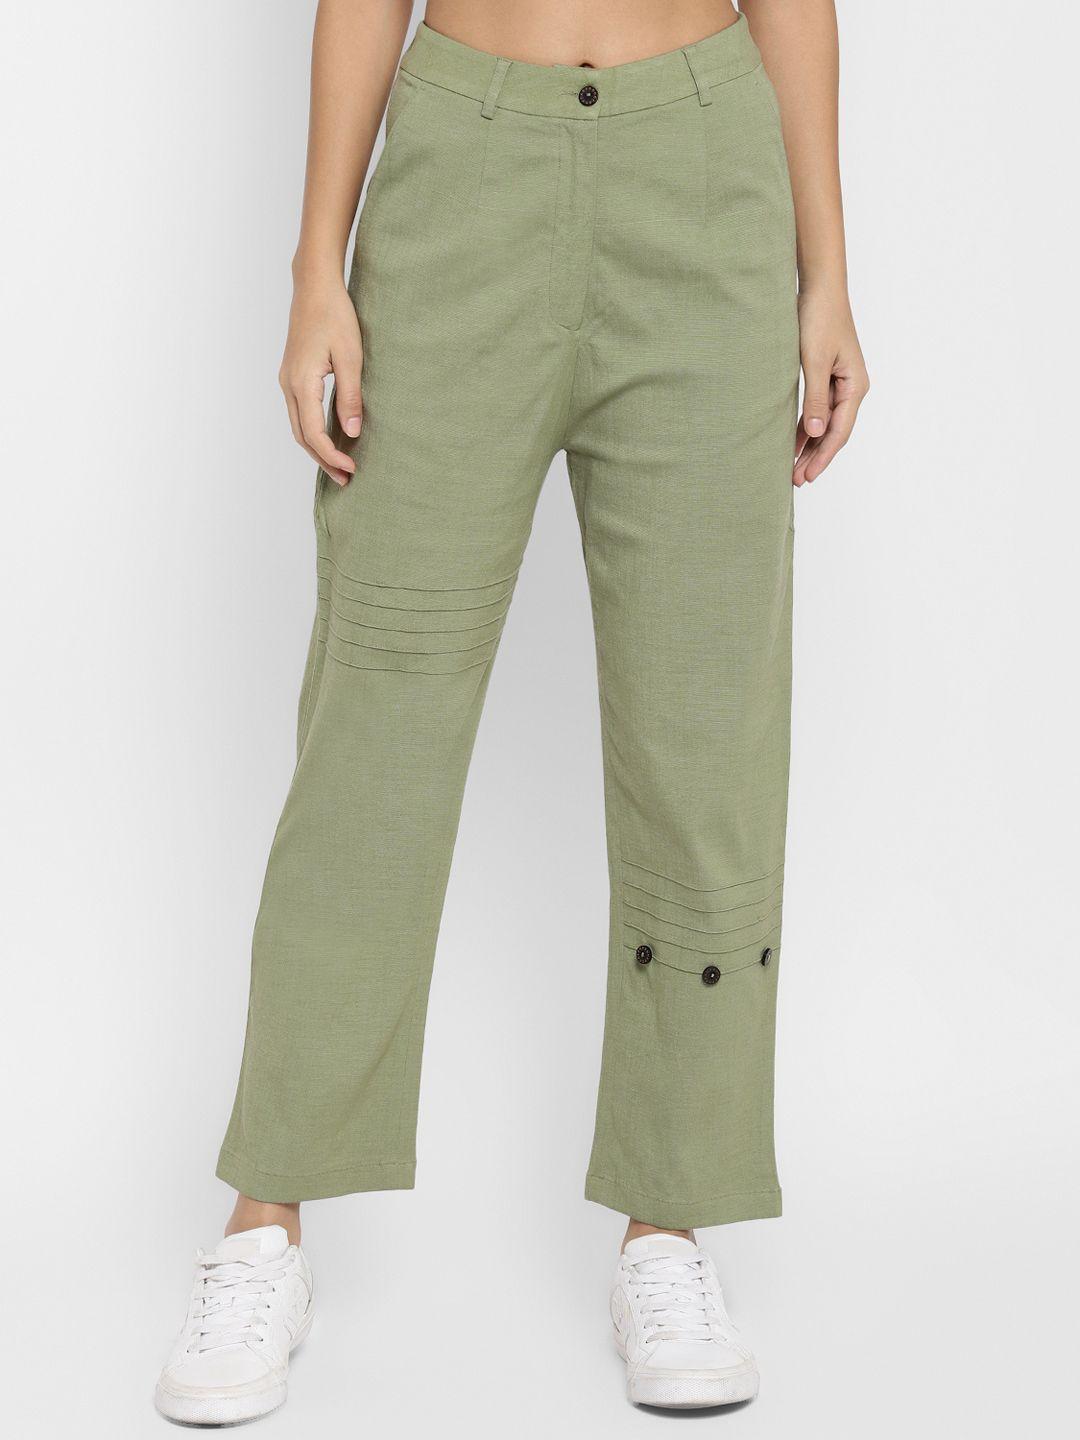 deebaco women olive green pintuck cotton trousers